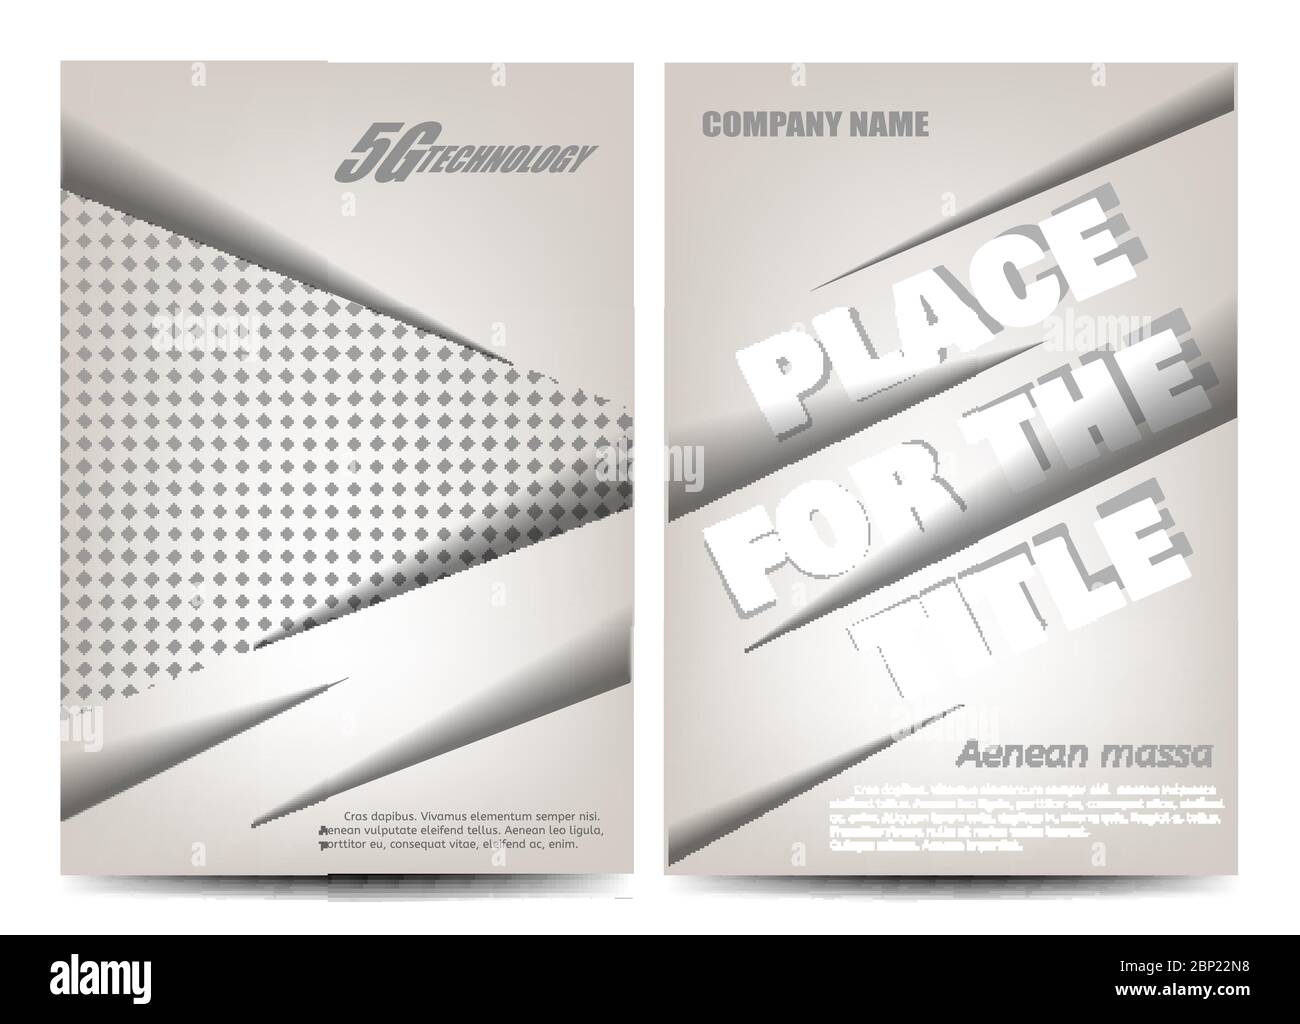 Brochure design. Flyer template. Editable A4 poster for business, education, presentation, website, magazine cover. Stock Vector